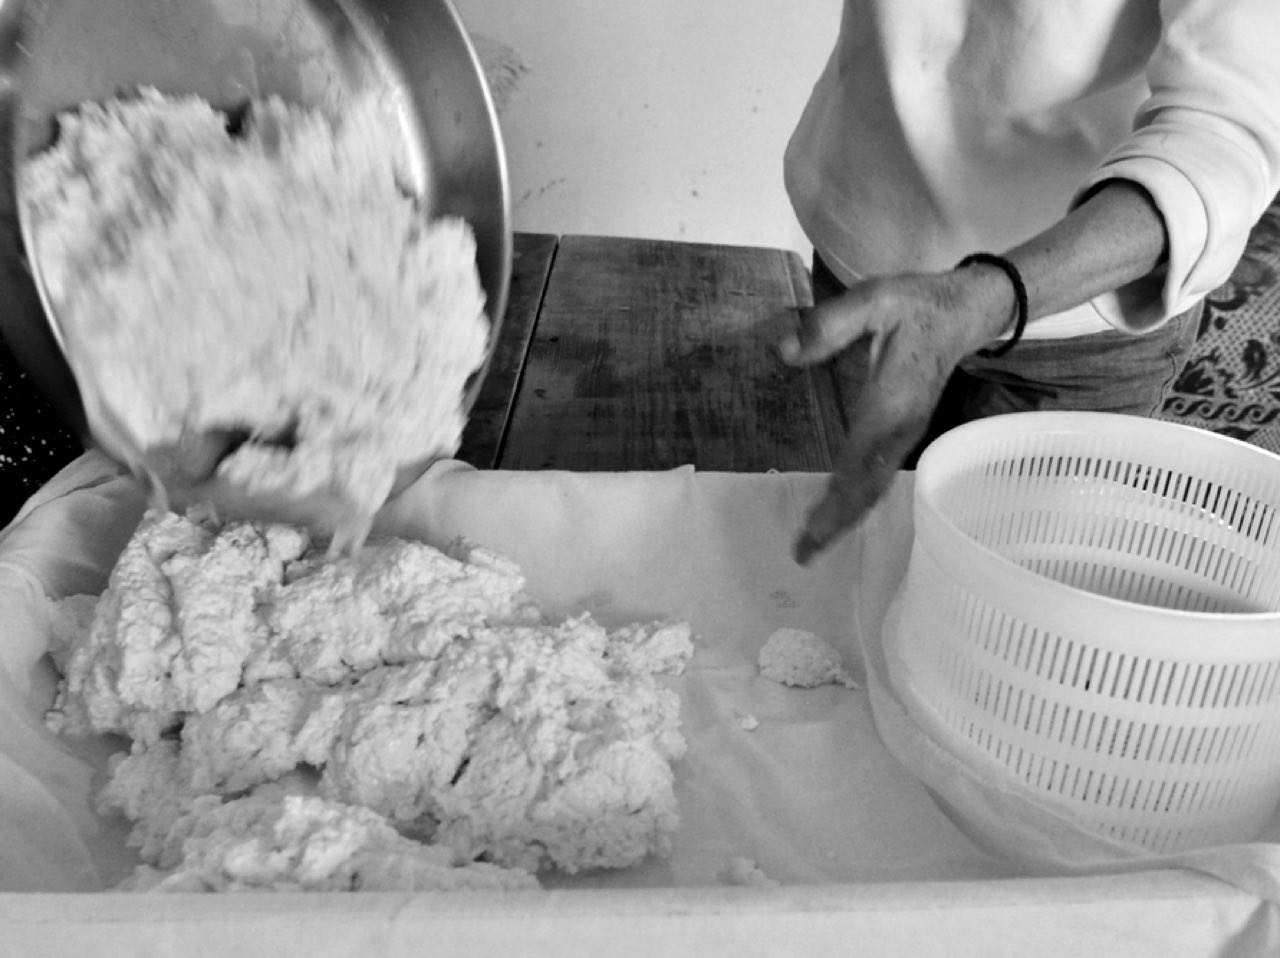 Amalthia-Making Cretan Cheese In The Heart Of Psiloritis Natural Park, cheese making workshop crete, cheese making workshop activity rethimno crete, making cretan cheese workshop, making cretan cheese activity rethymno crete